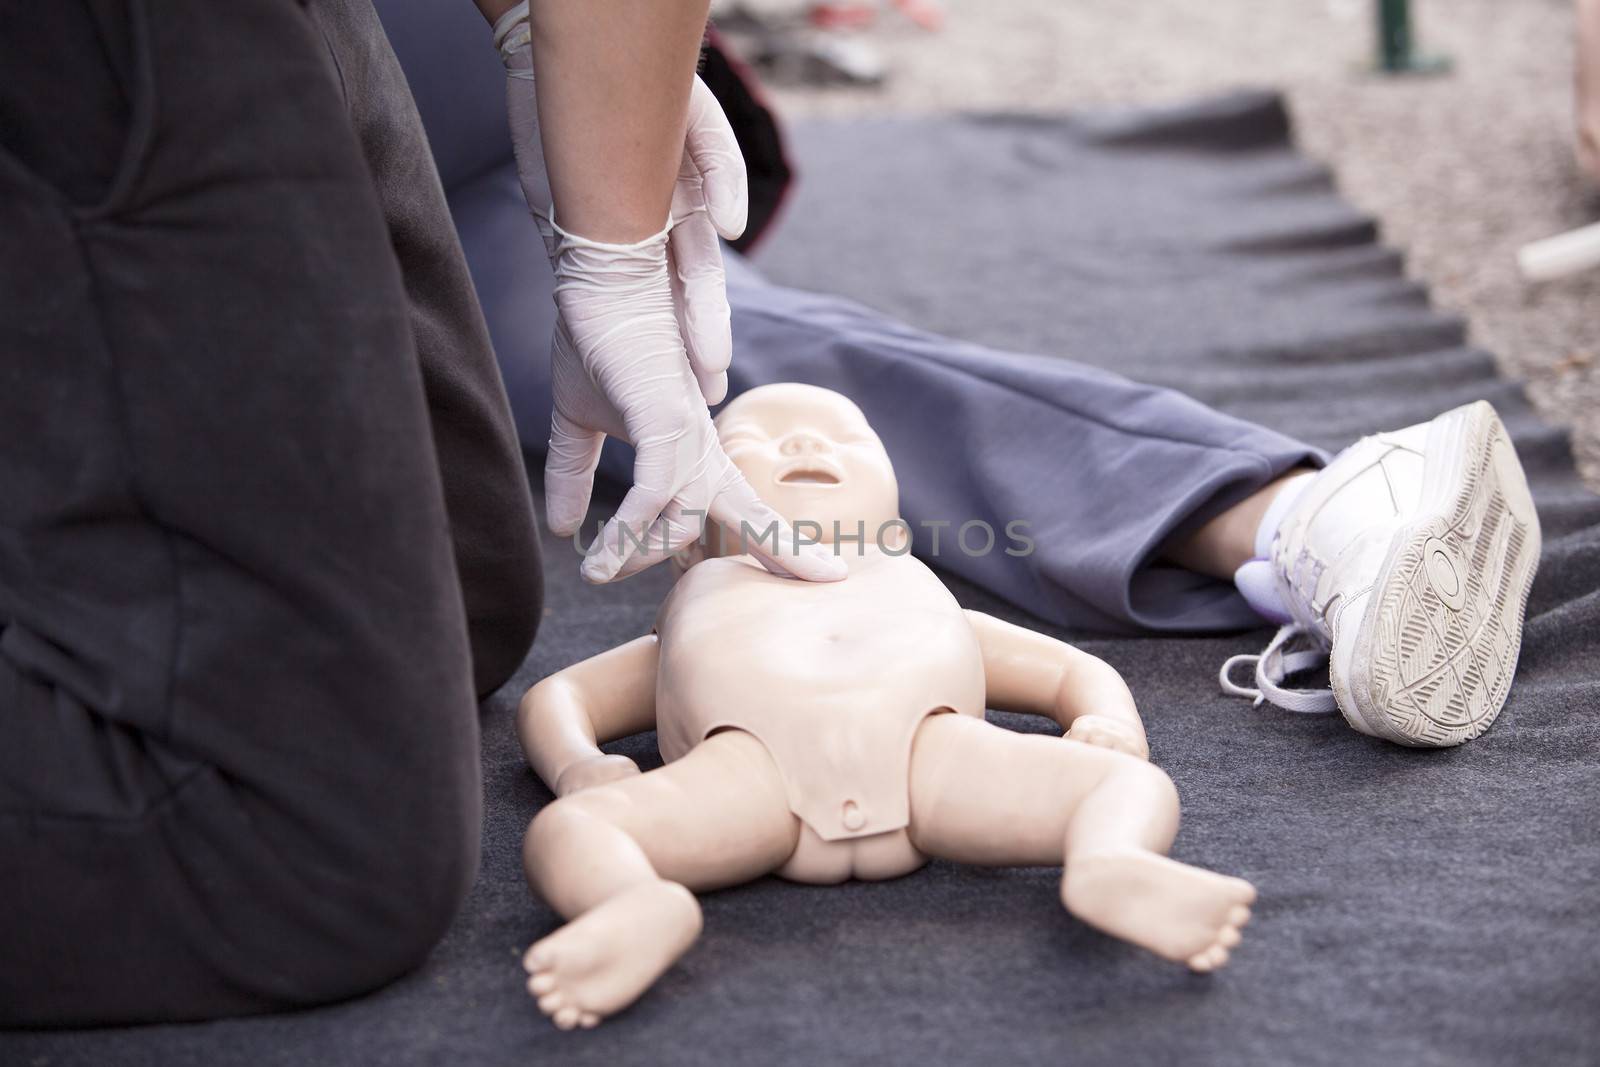 Infant dummy heart massage by wellphoto